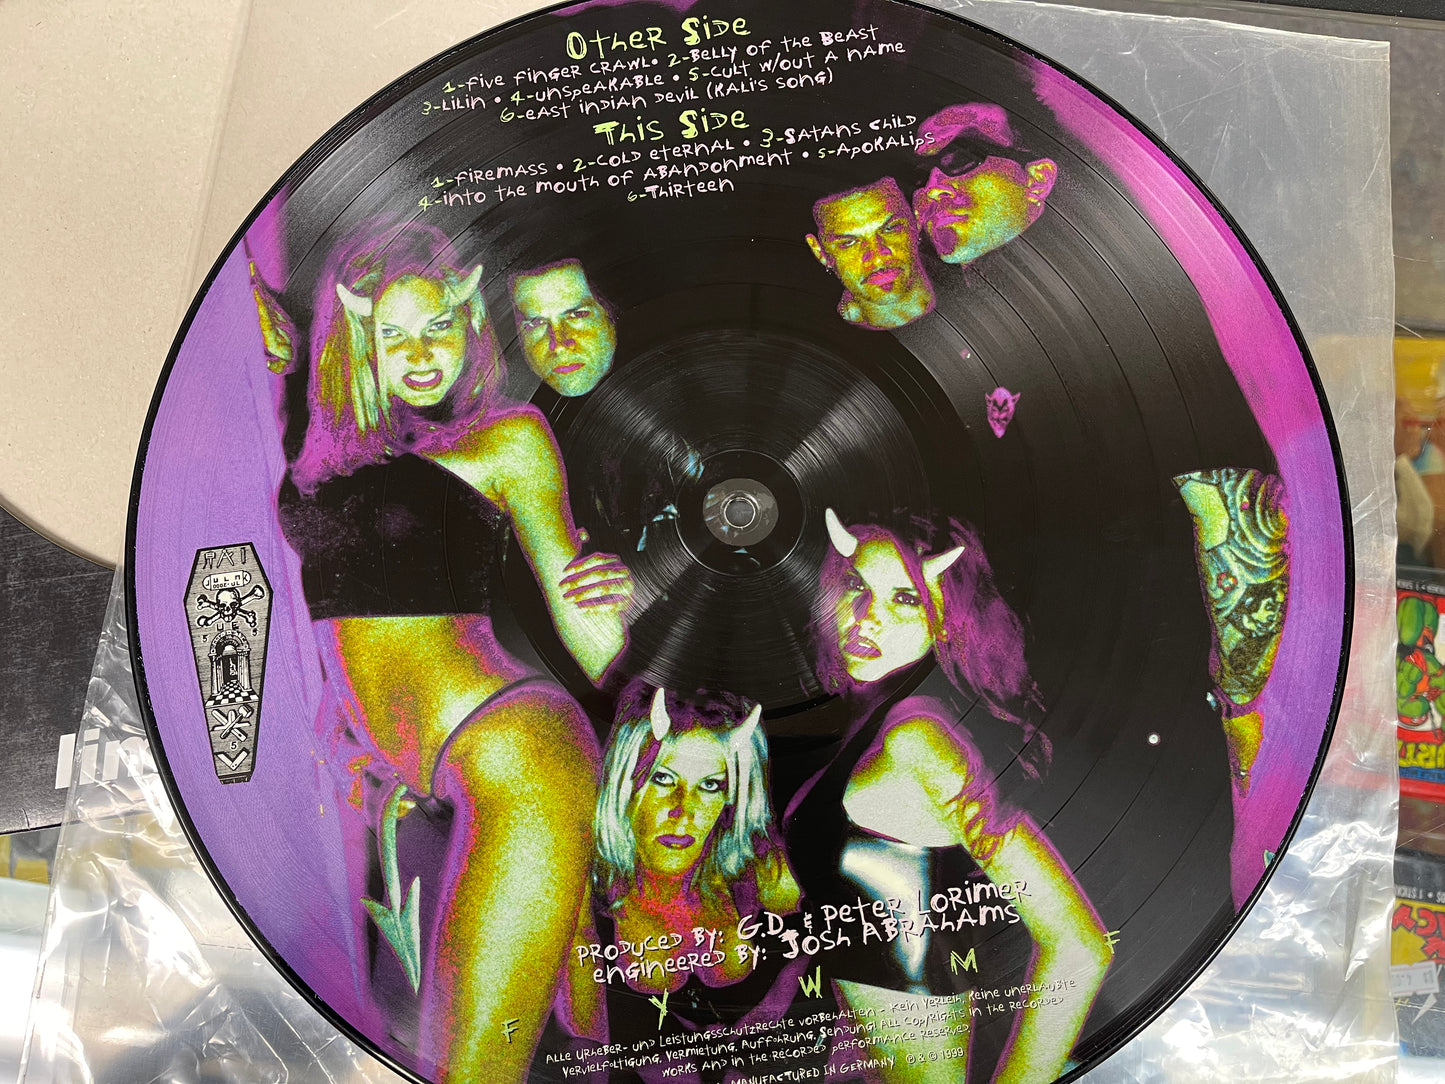 Danzig - 6:66 Satans Child (1999, German Picture Disk)